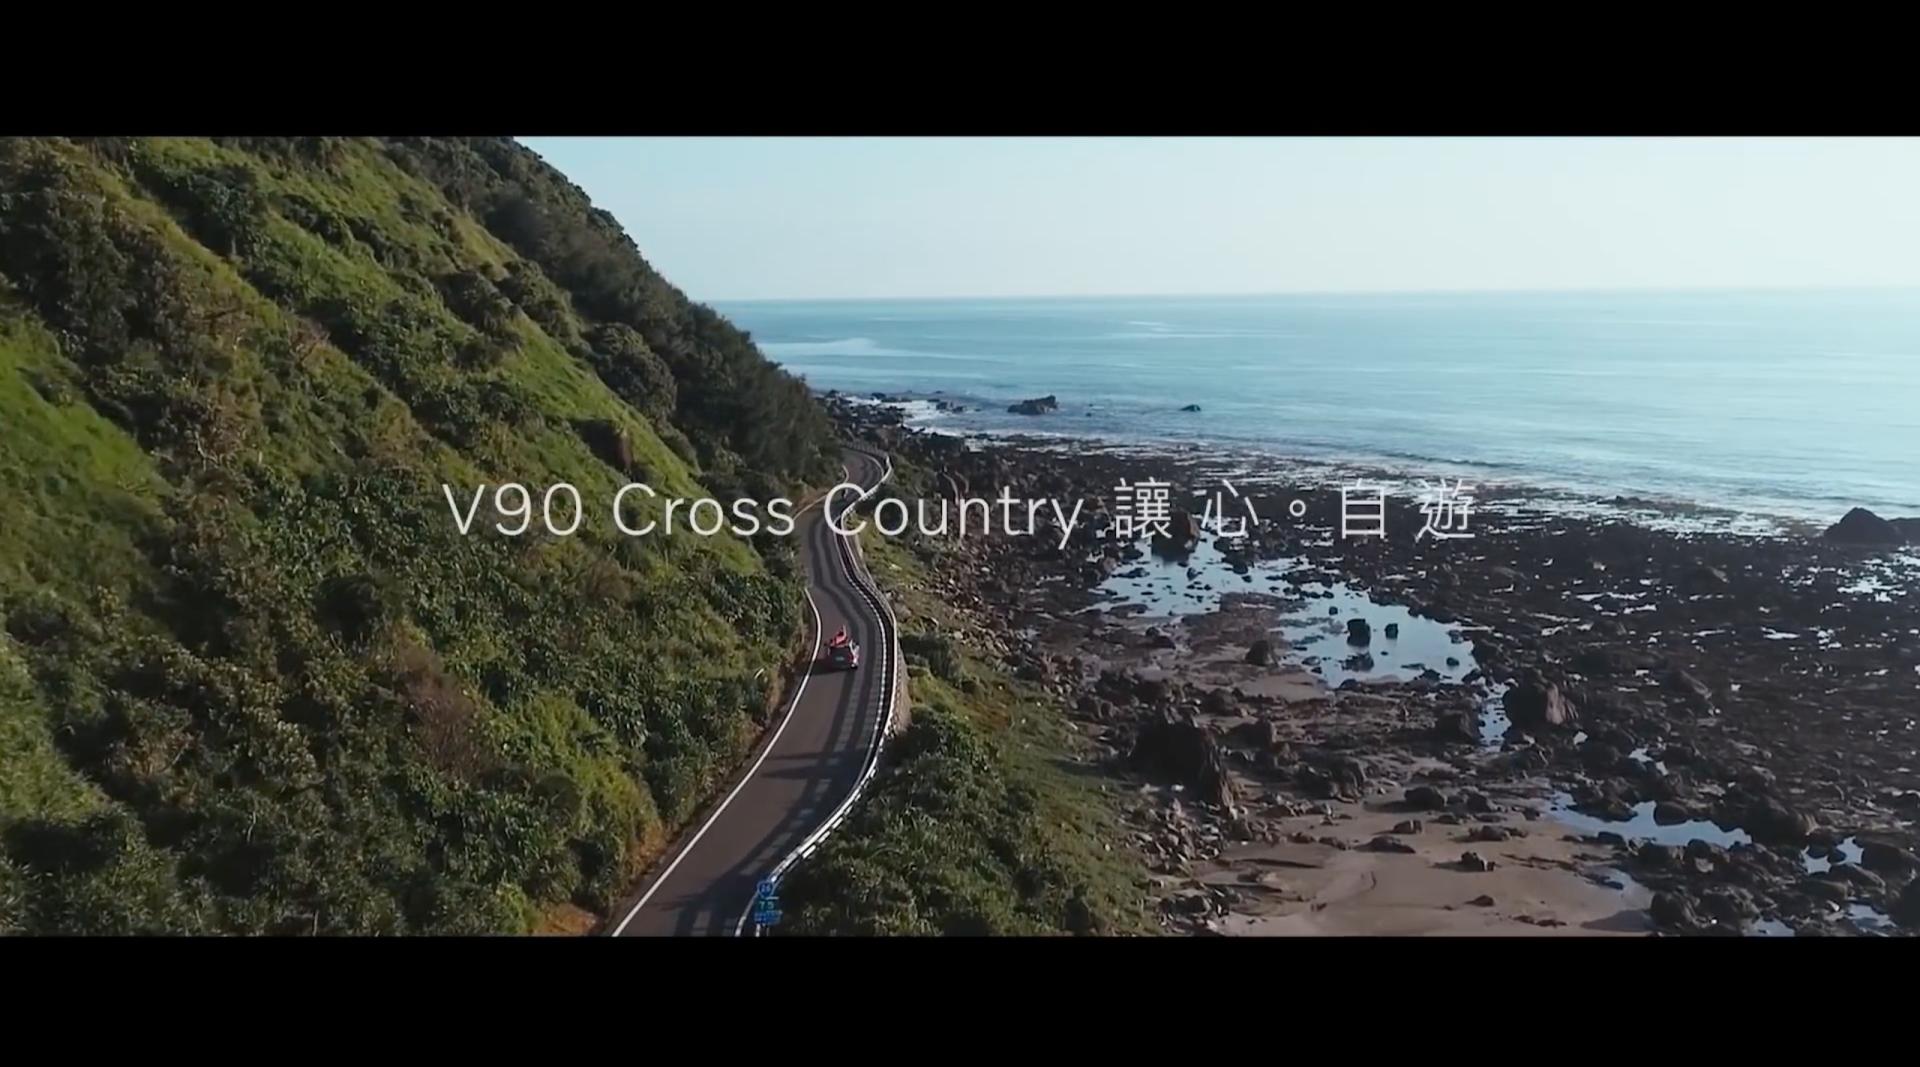 Alpha導演作品 - Volvo V90 Cross Country 讓心。自遊 完整版